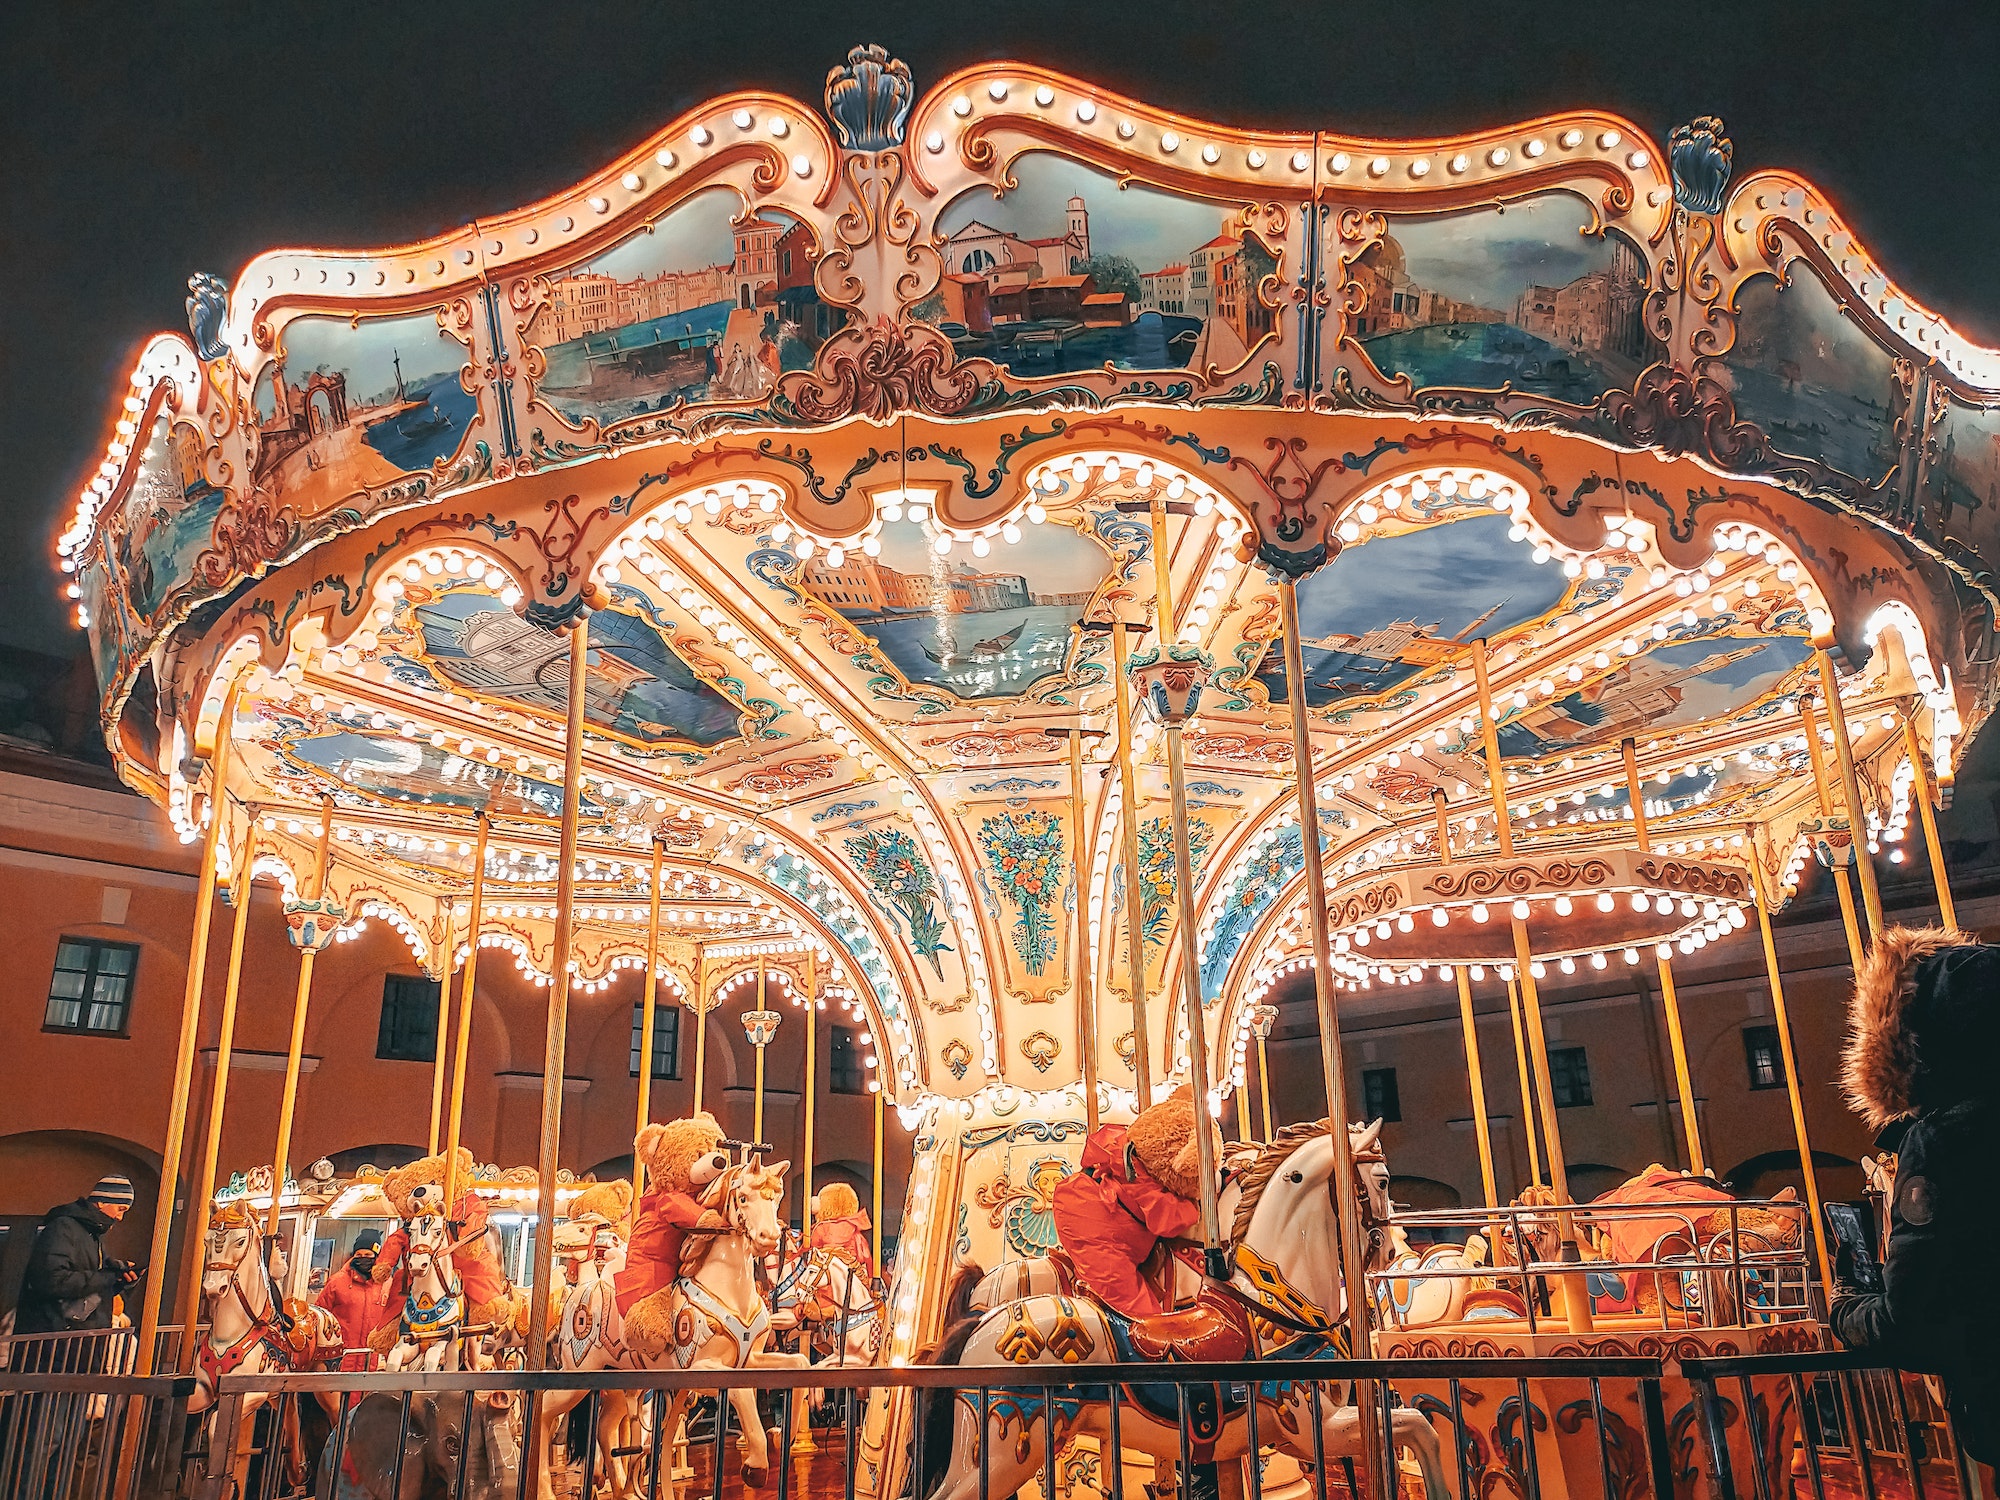 Carousel at new year fair